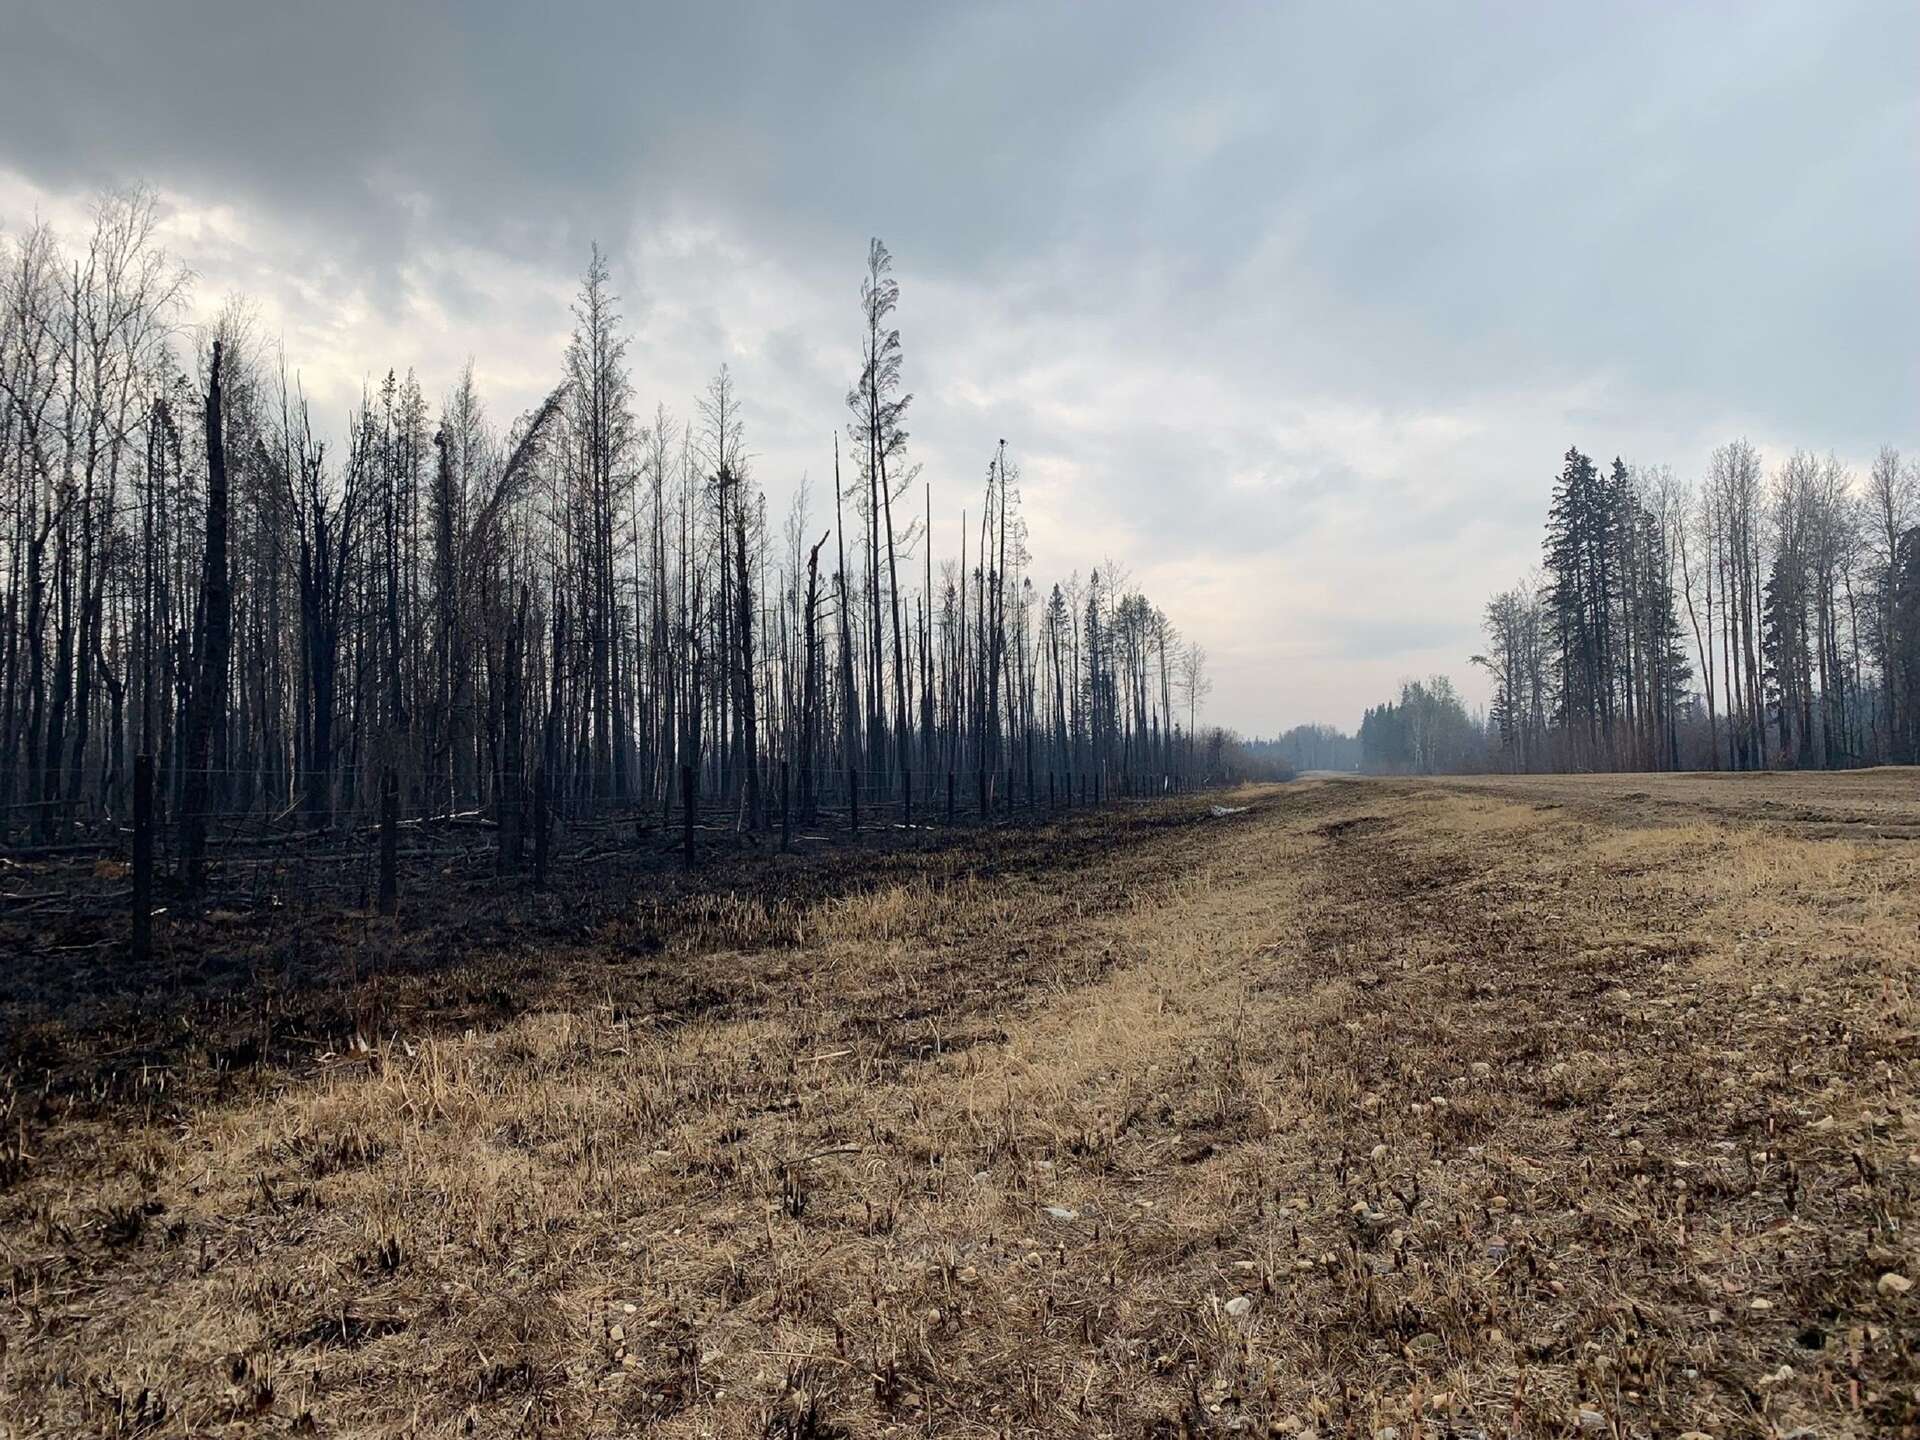 613 incendies hors de contrôle au Canada qui bat un record d’émissions de carbone !